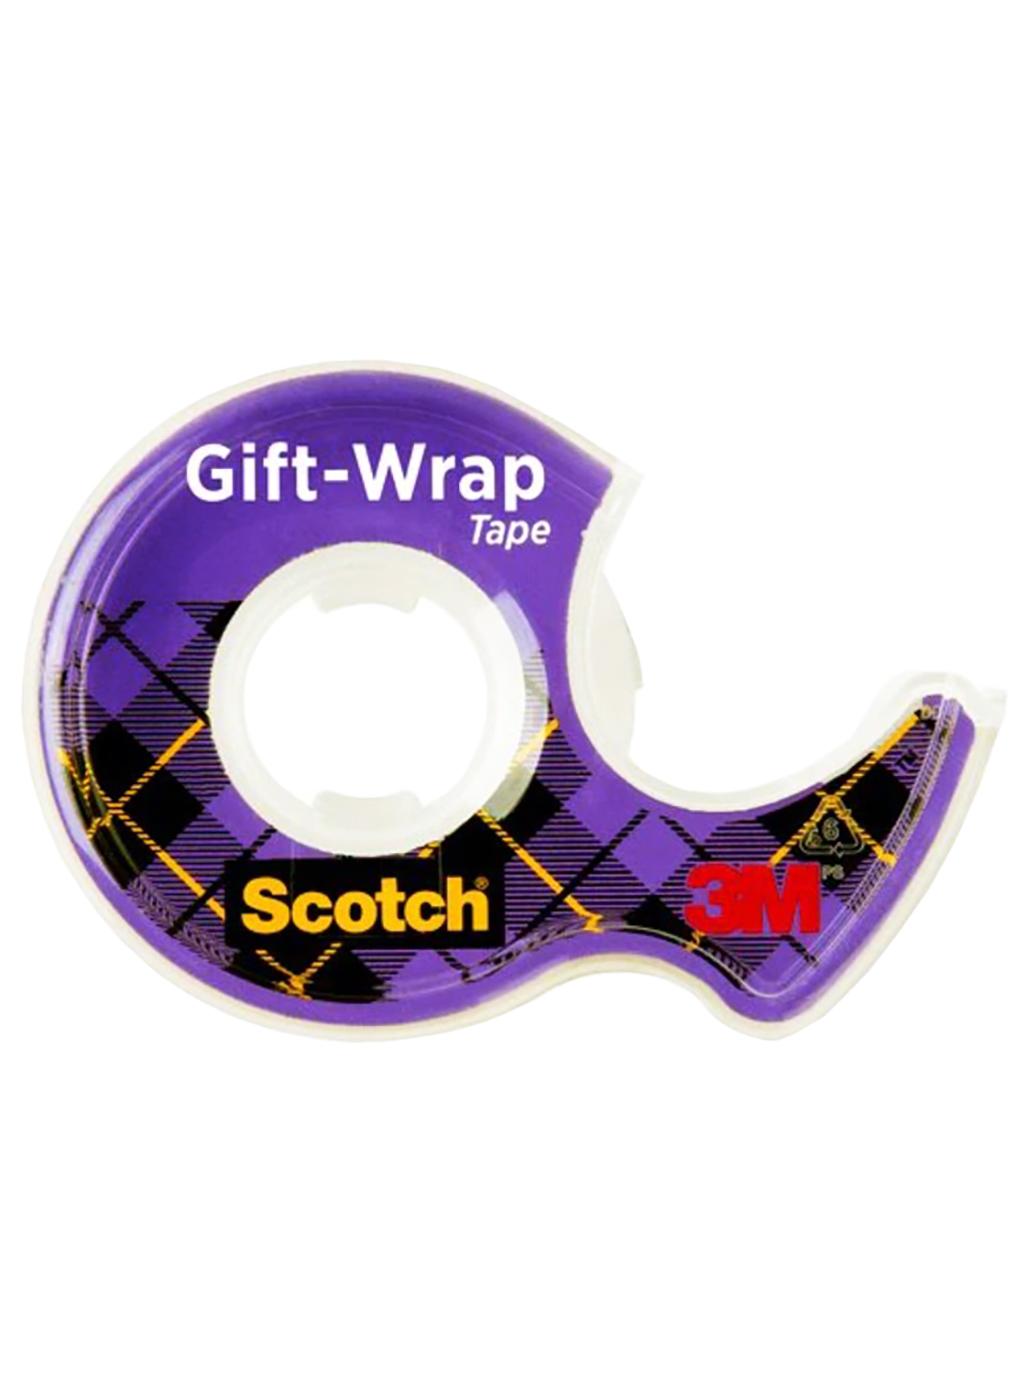 Scotch Satin Finish Gift Wrap Tape Dispensered Rolls; image 3 of 3